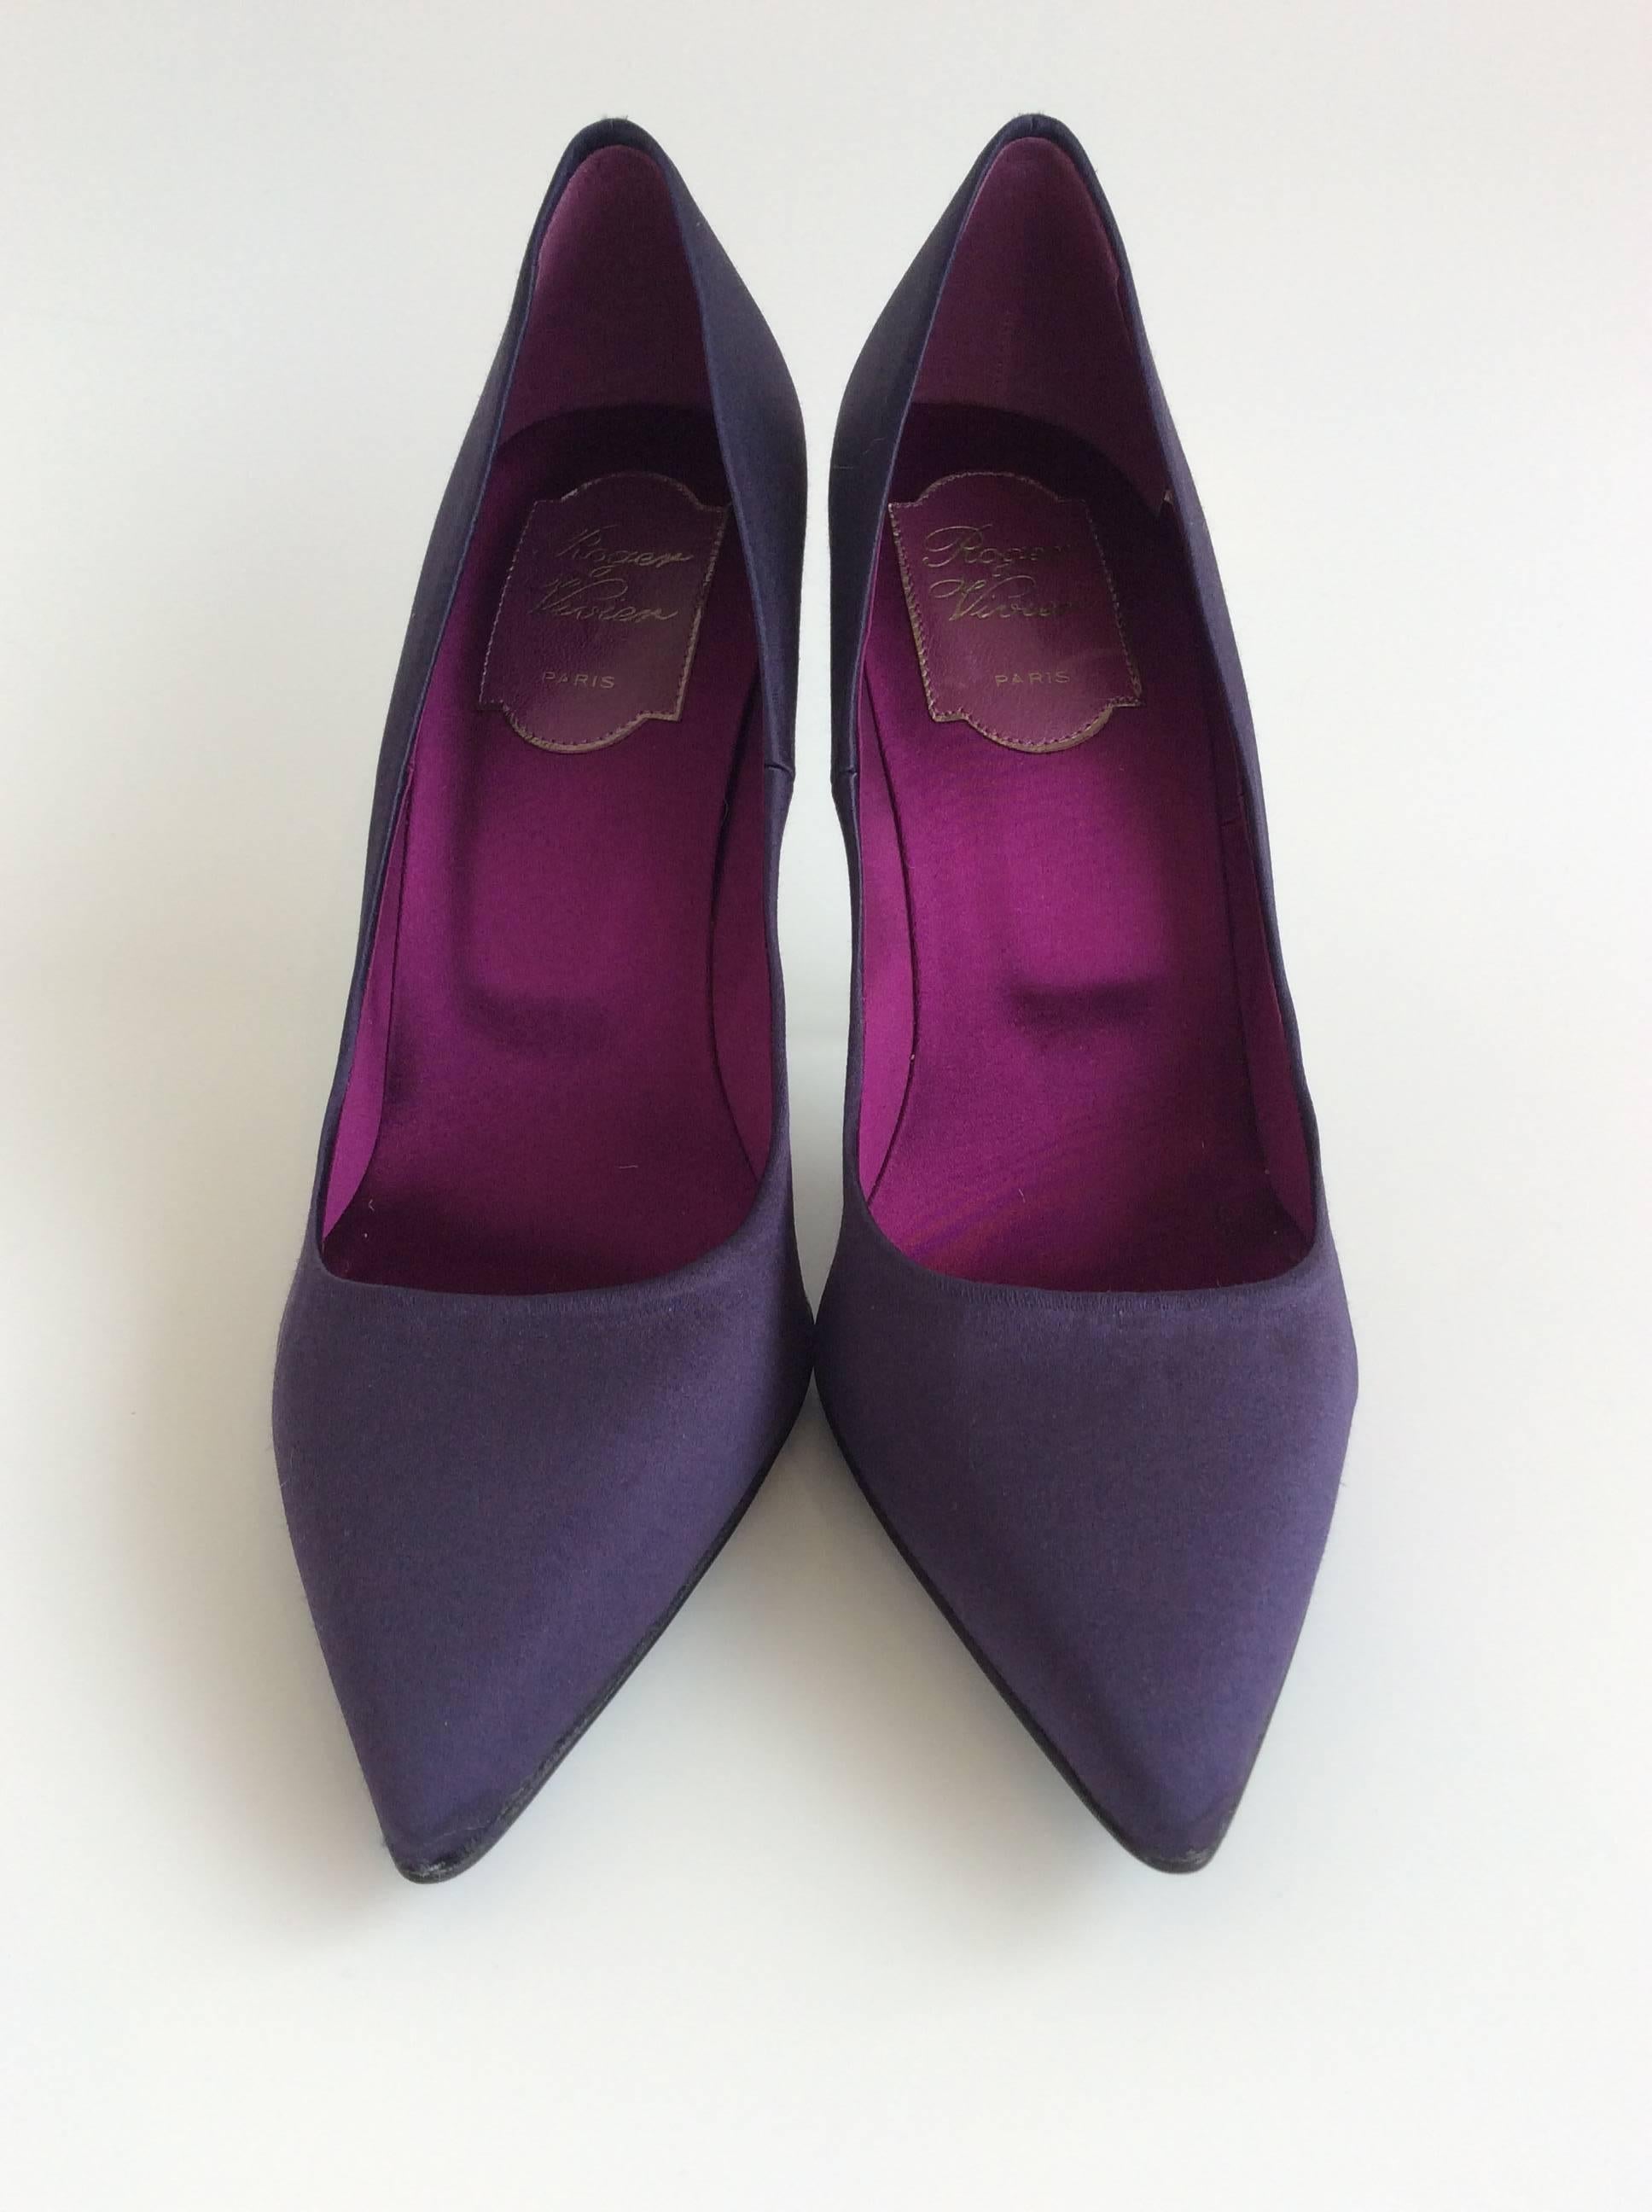 Roger Vivier purple peaux de soil pumps with a 4in silver metallic stiletto heel and lined in magenta silk.
Sz37 

